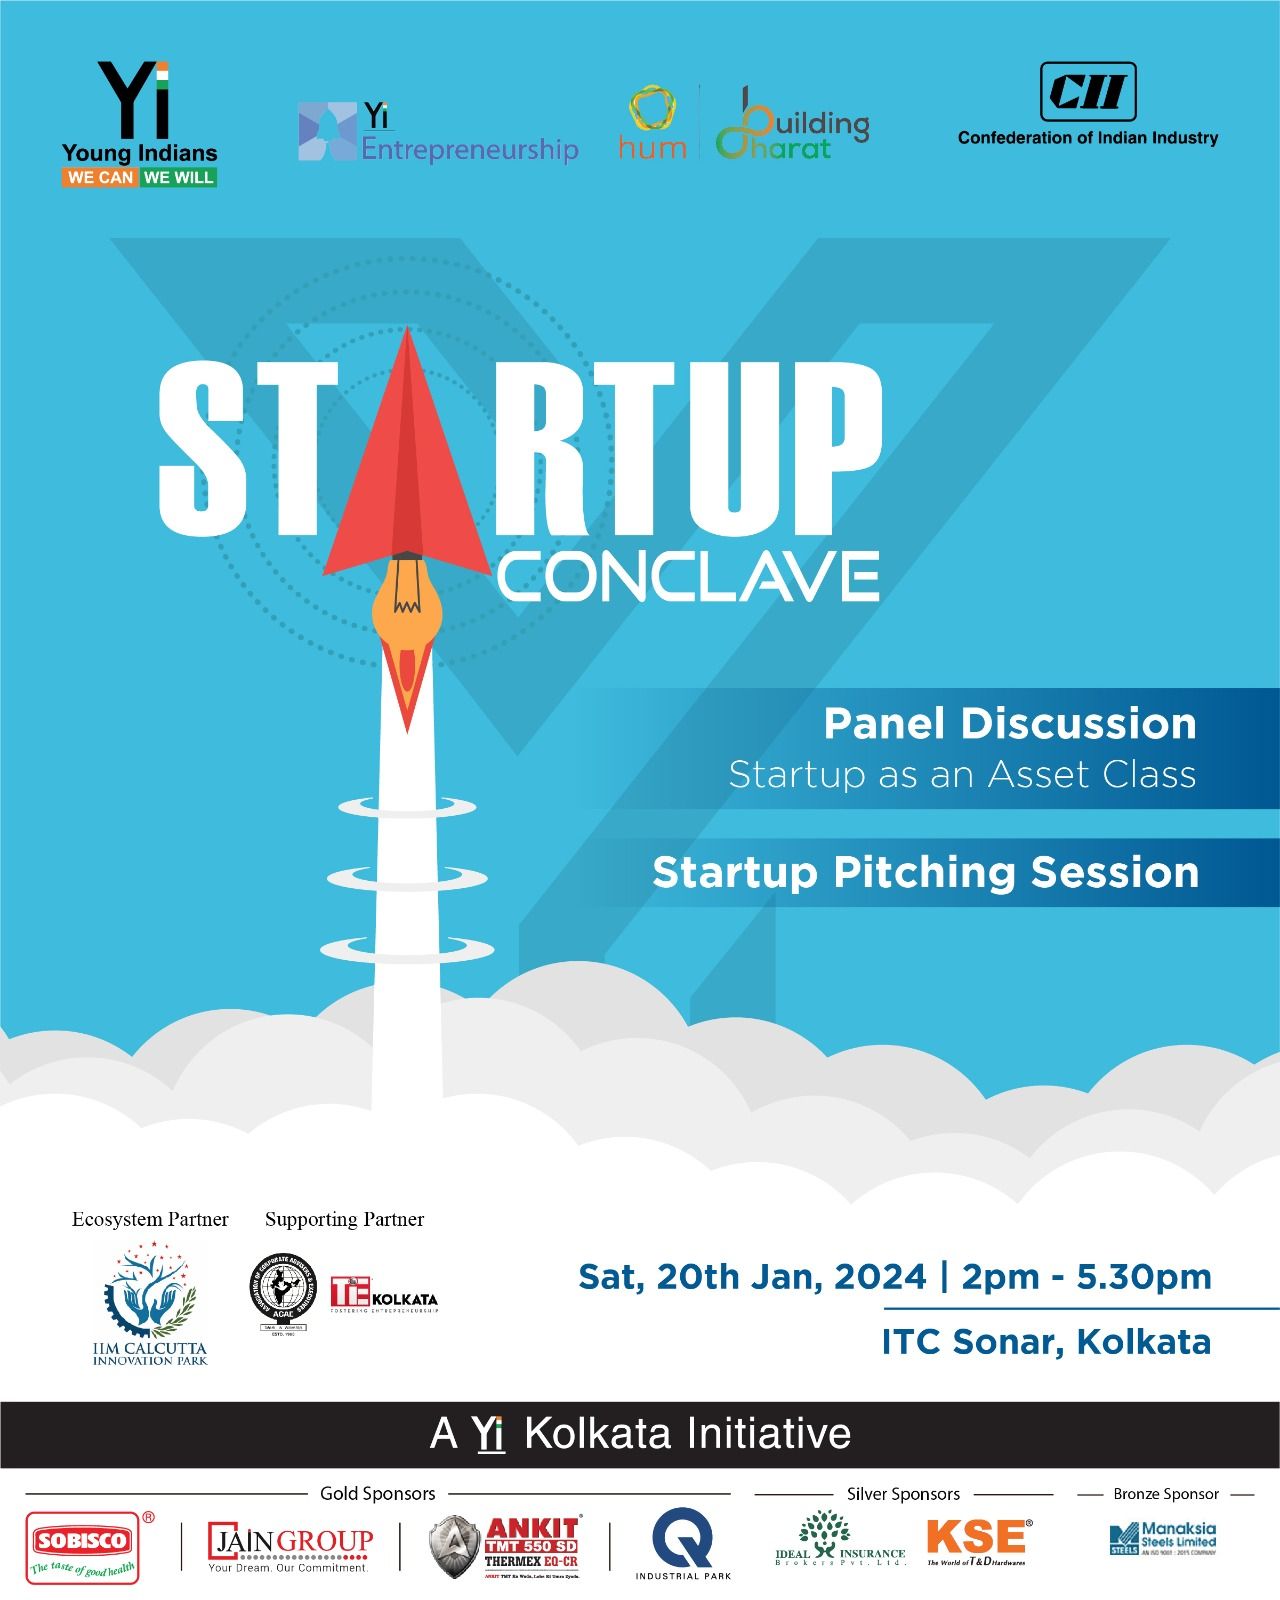 Yi24 |  Entrepreneurship, Membership - Start Up Conclave